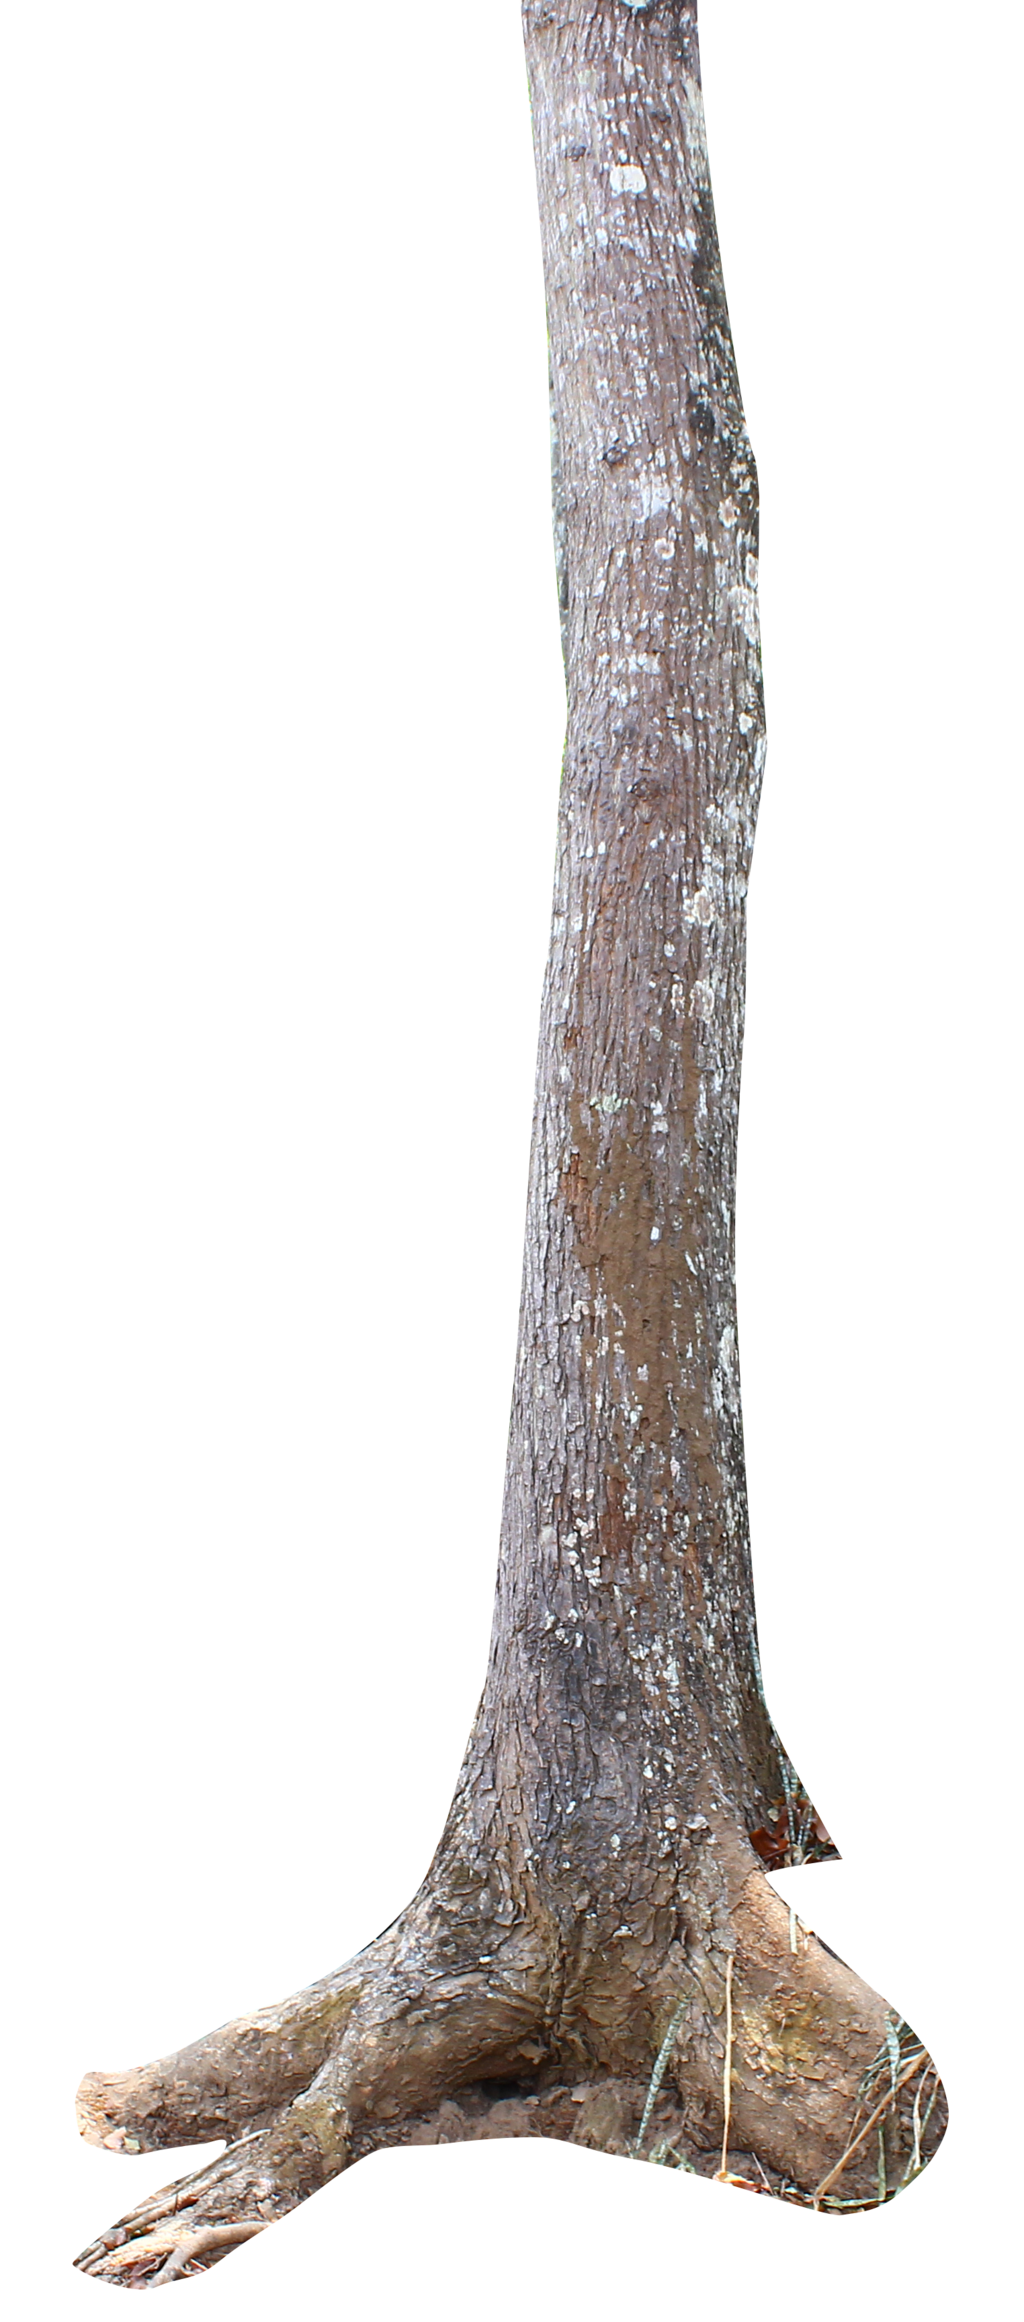 Tree trunk photo